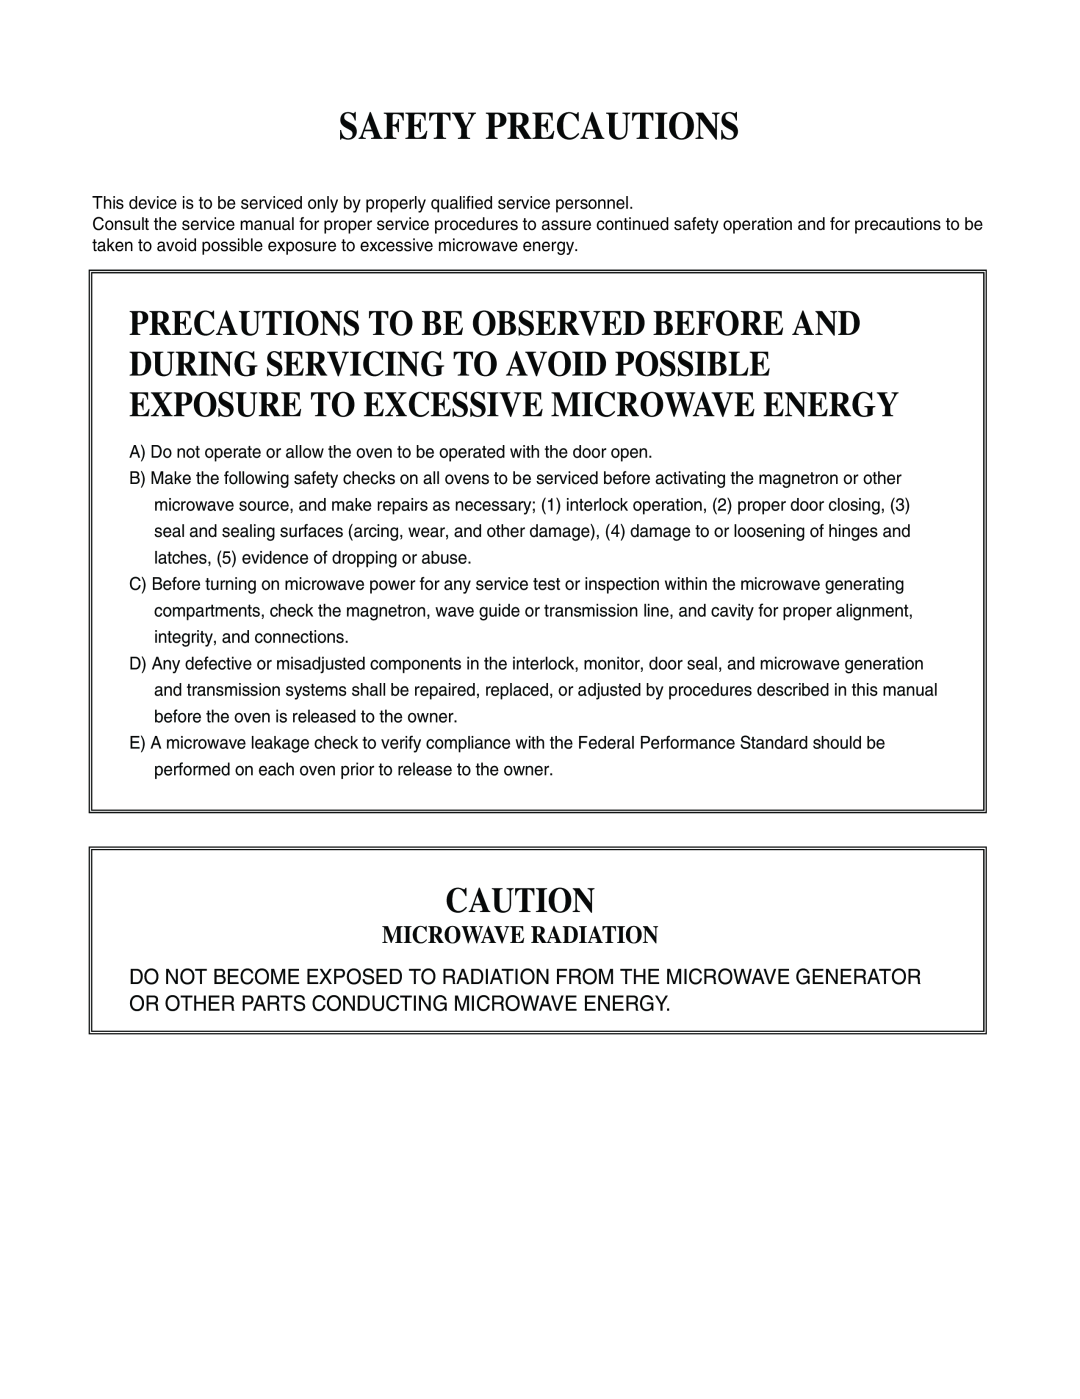 GE LMAB1240ST service manual Safety Precautions, Microwave Radiation 